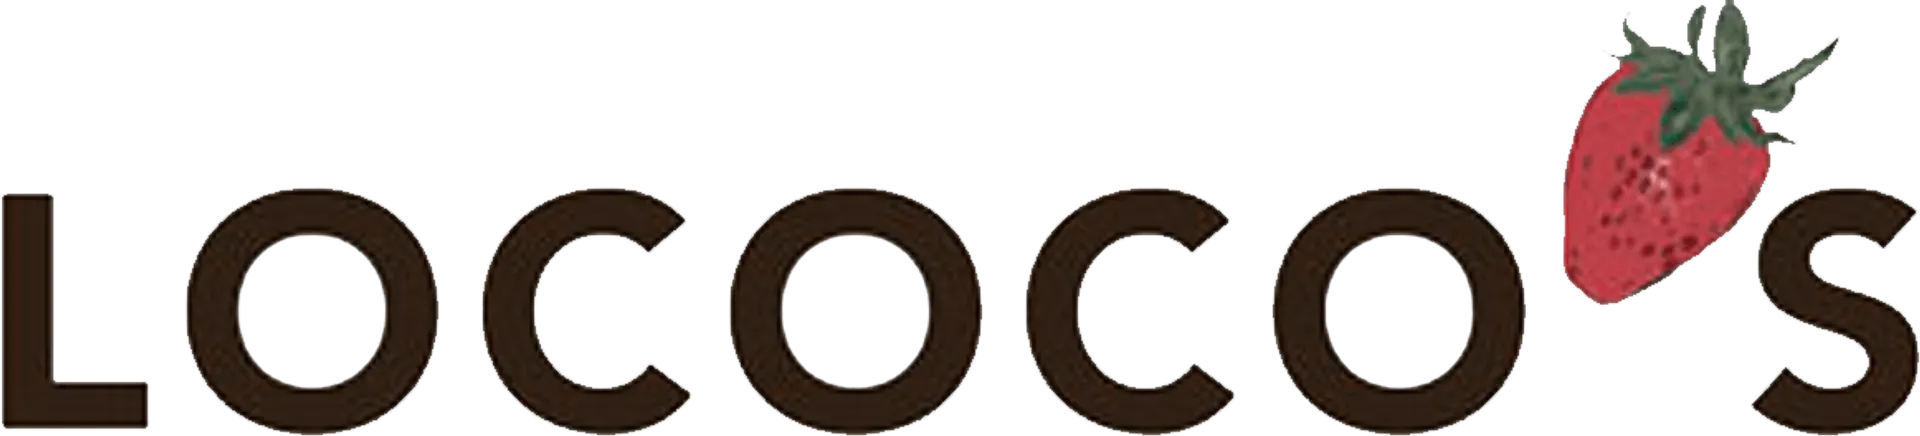 LOCOCO’S logo